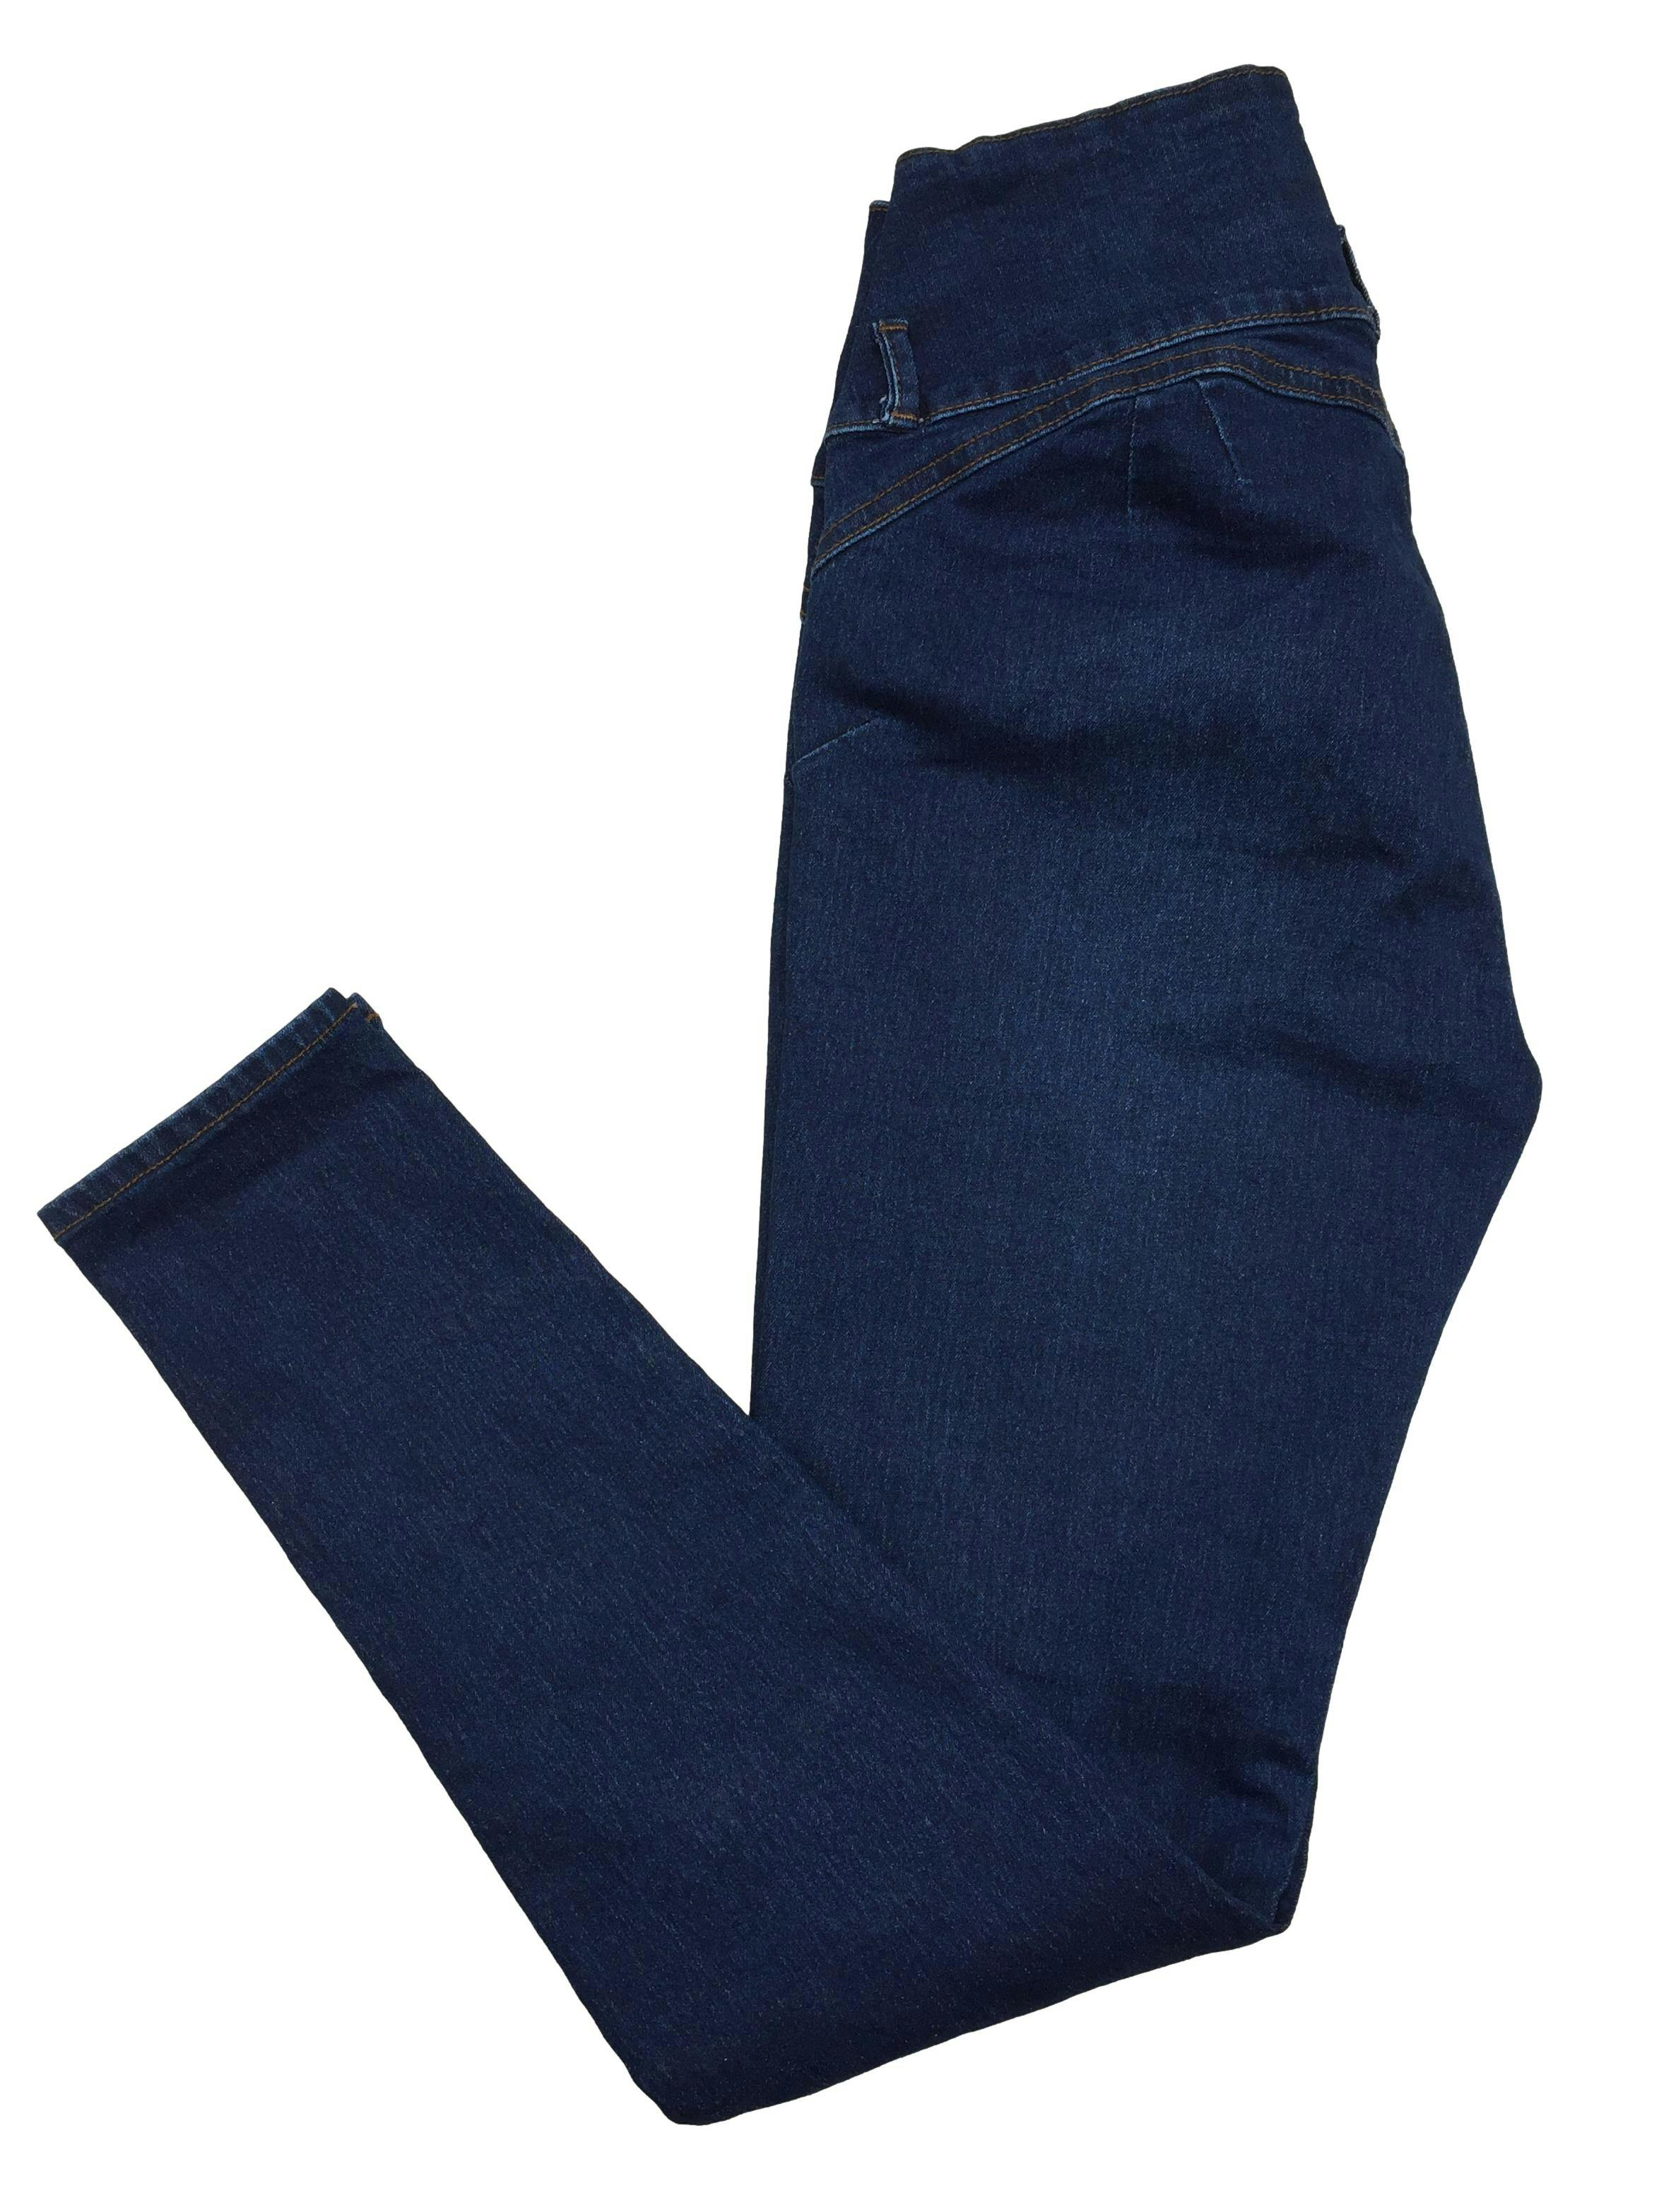 Skinny jean Parada 111 pretina ancha, tres botones. Cintura: 70cm (sin estirar), Tiro: 27cm, Largo: 95cm